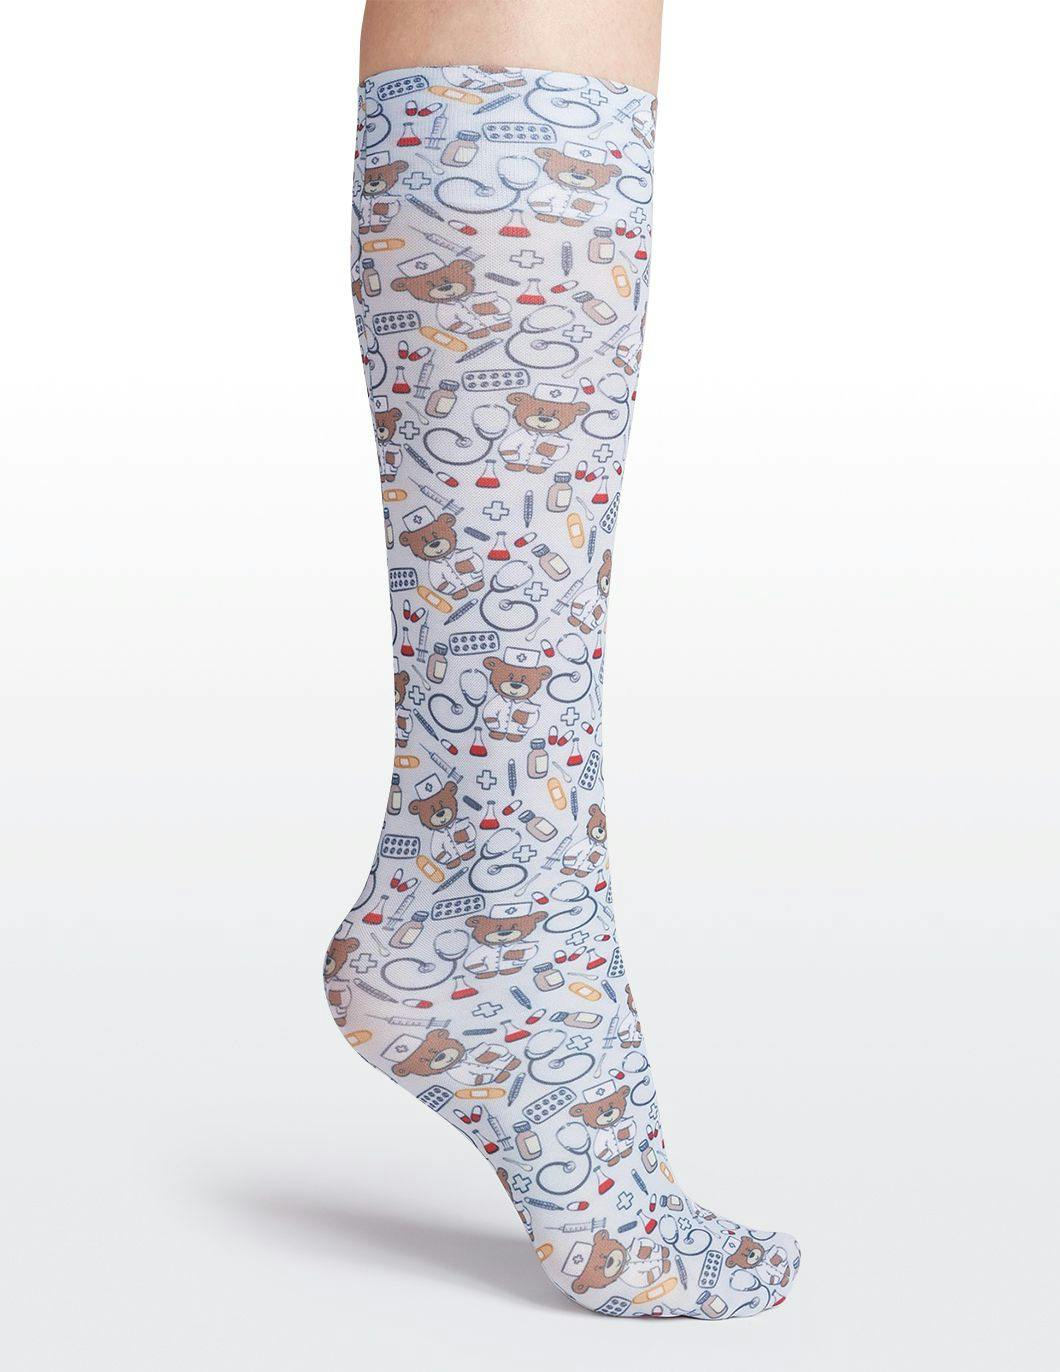 cutieful-compression-socks-10-18-mmhg-nurse-bears-print